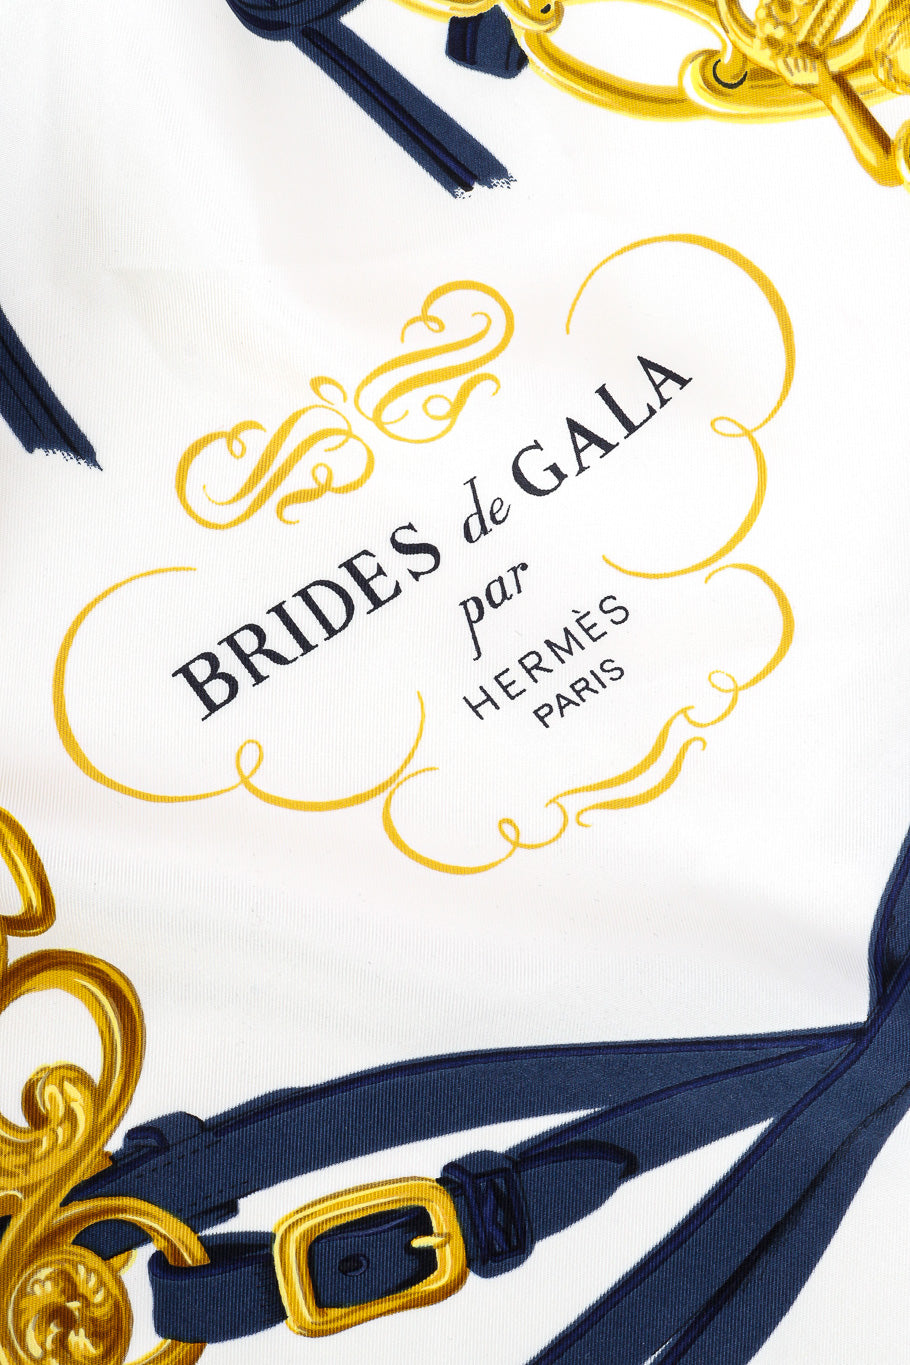 Brides de gala scarf by Hermes close up signature @recessla